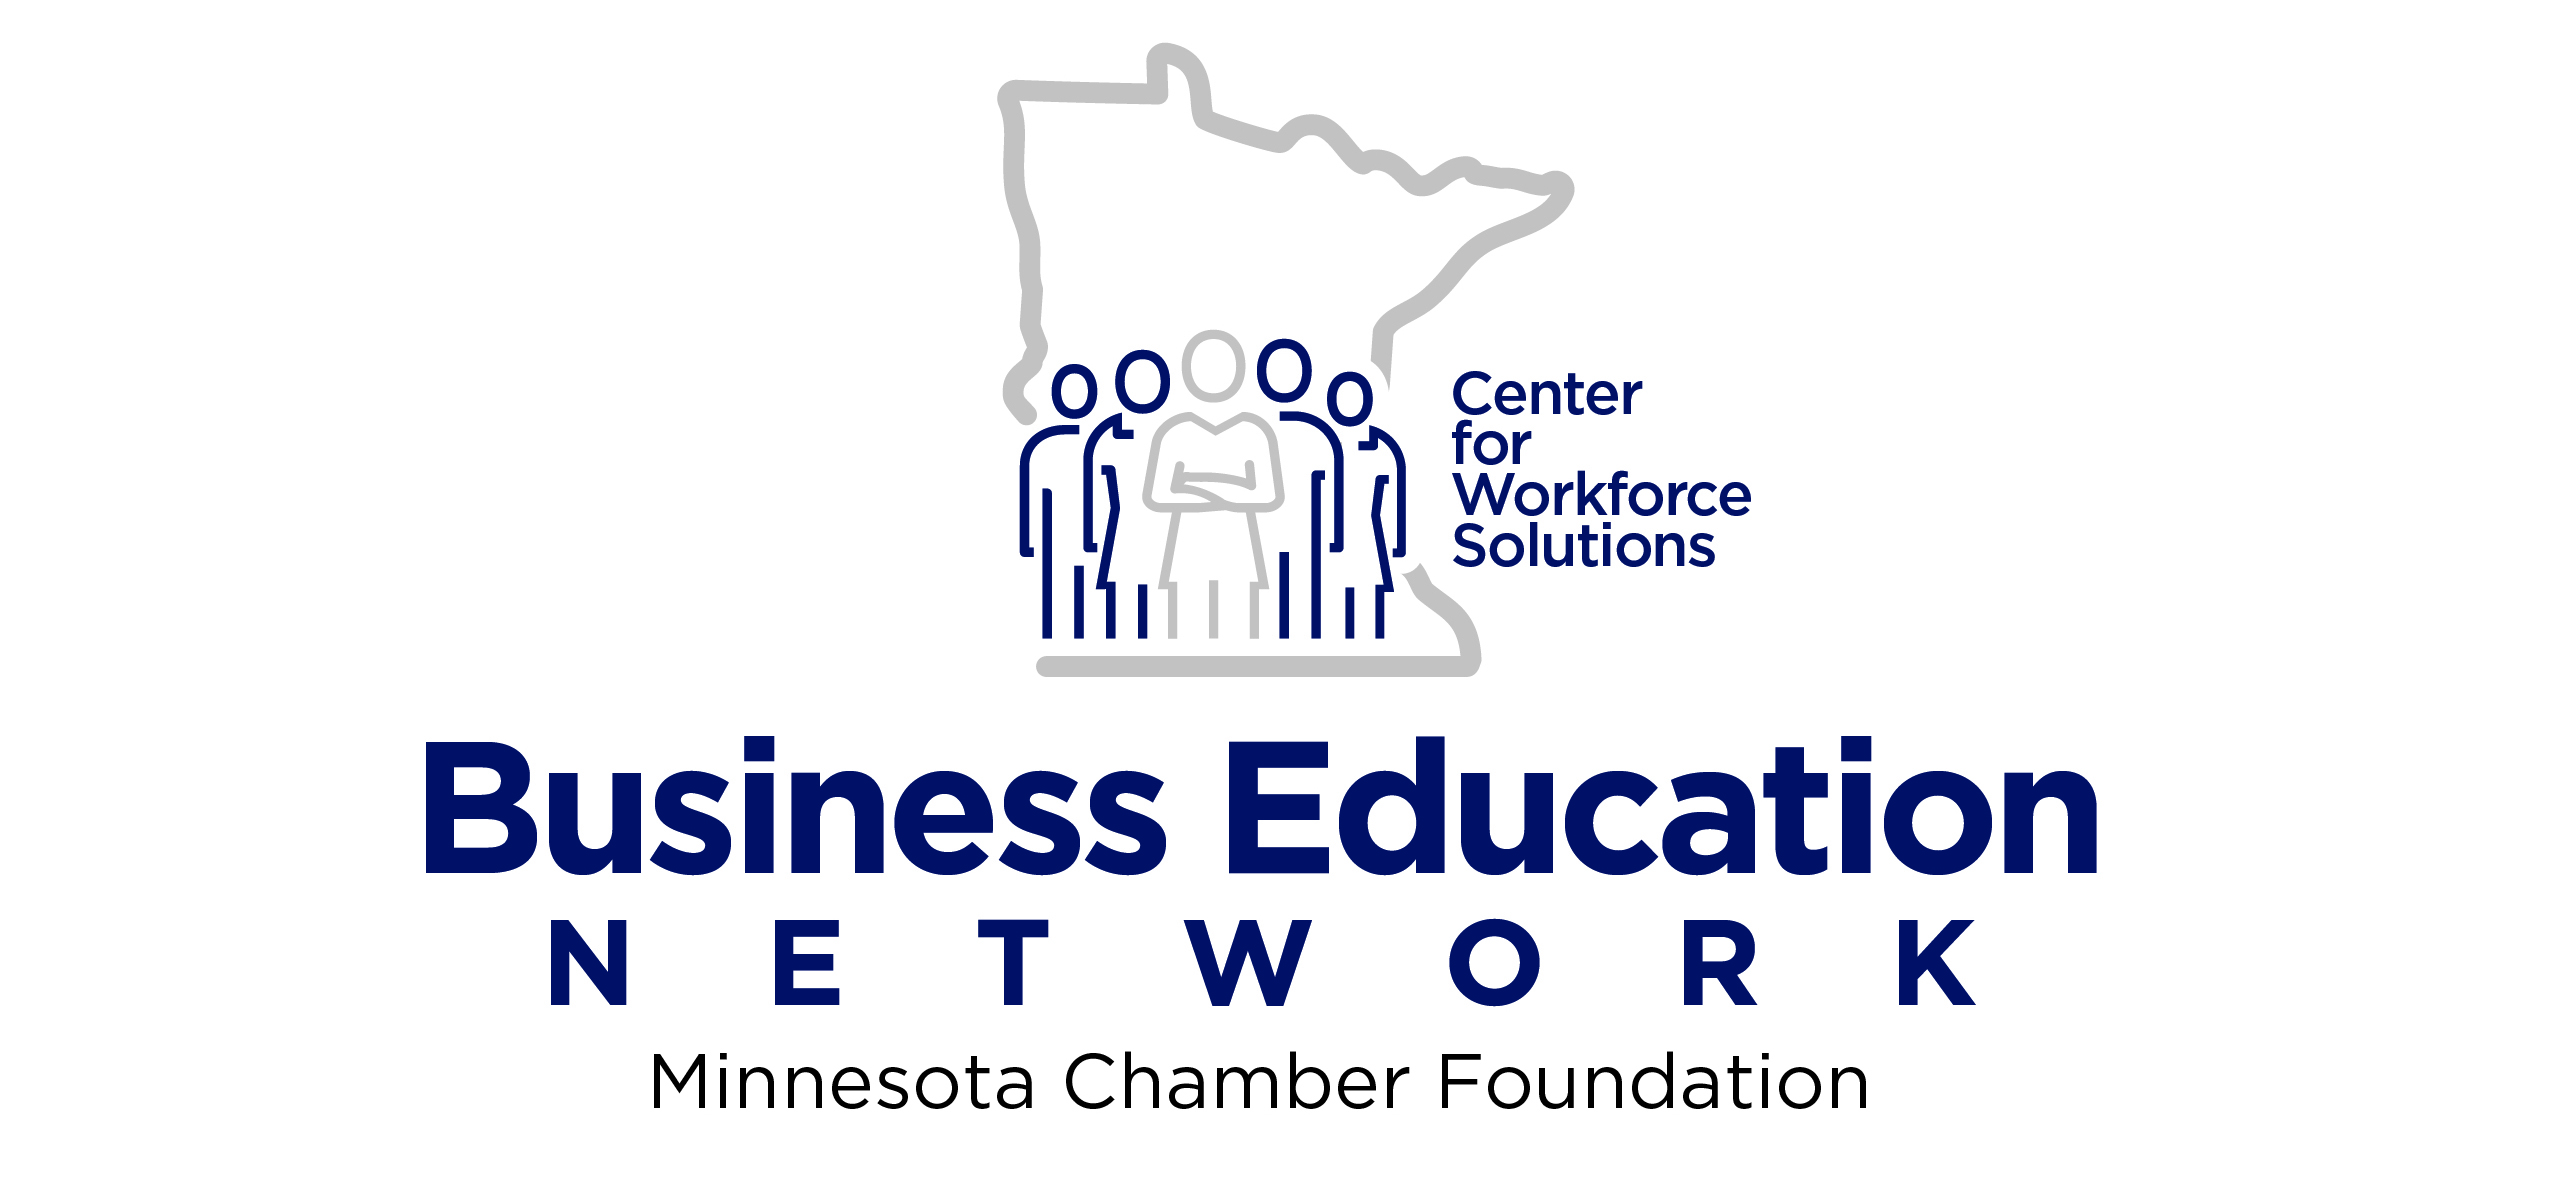 Business education network Minnesota Chamber foundation